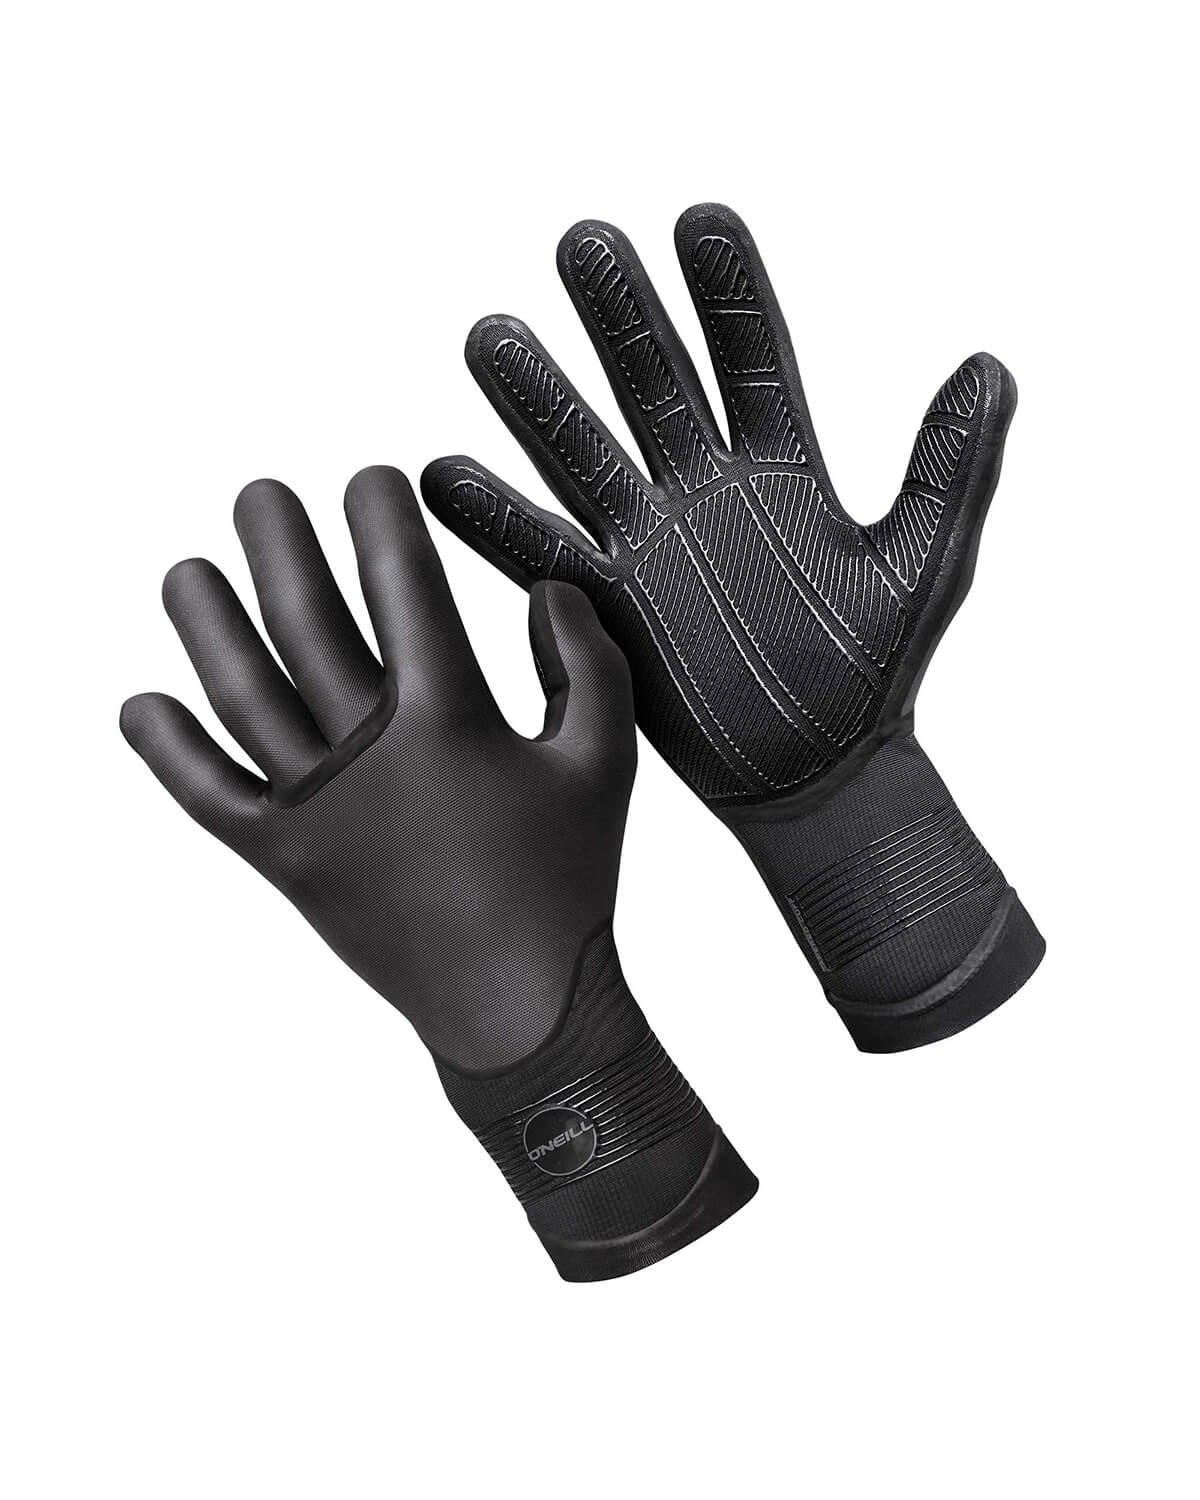 5mm O'Neill PSYCHO TECH 5-Finger Wetsuit Gloves